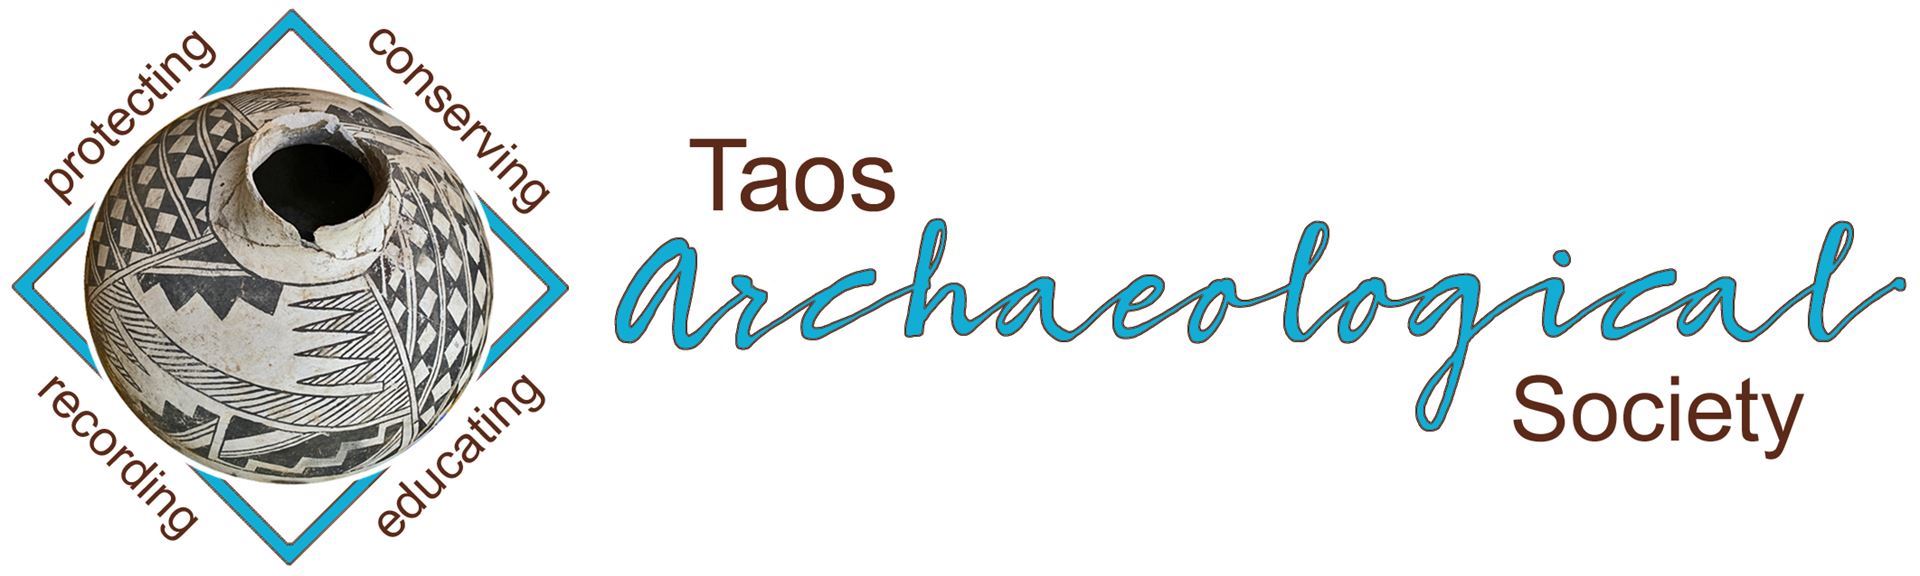 Taos Archaeological Society